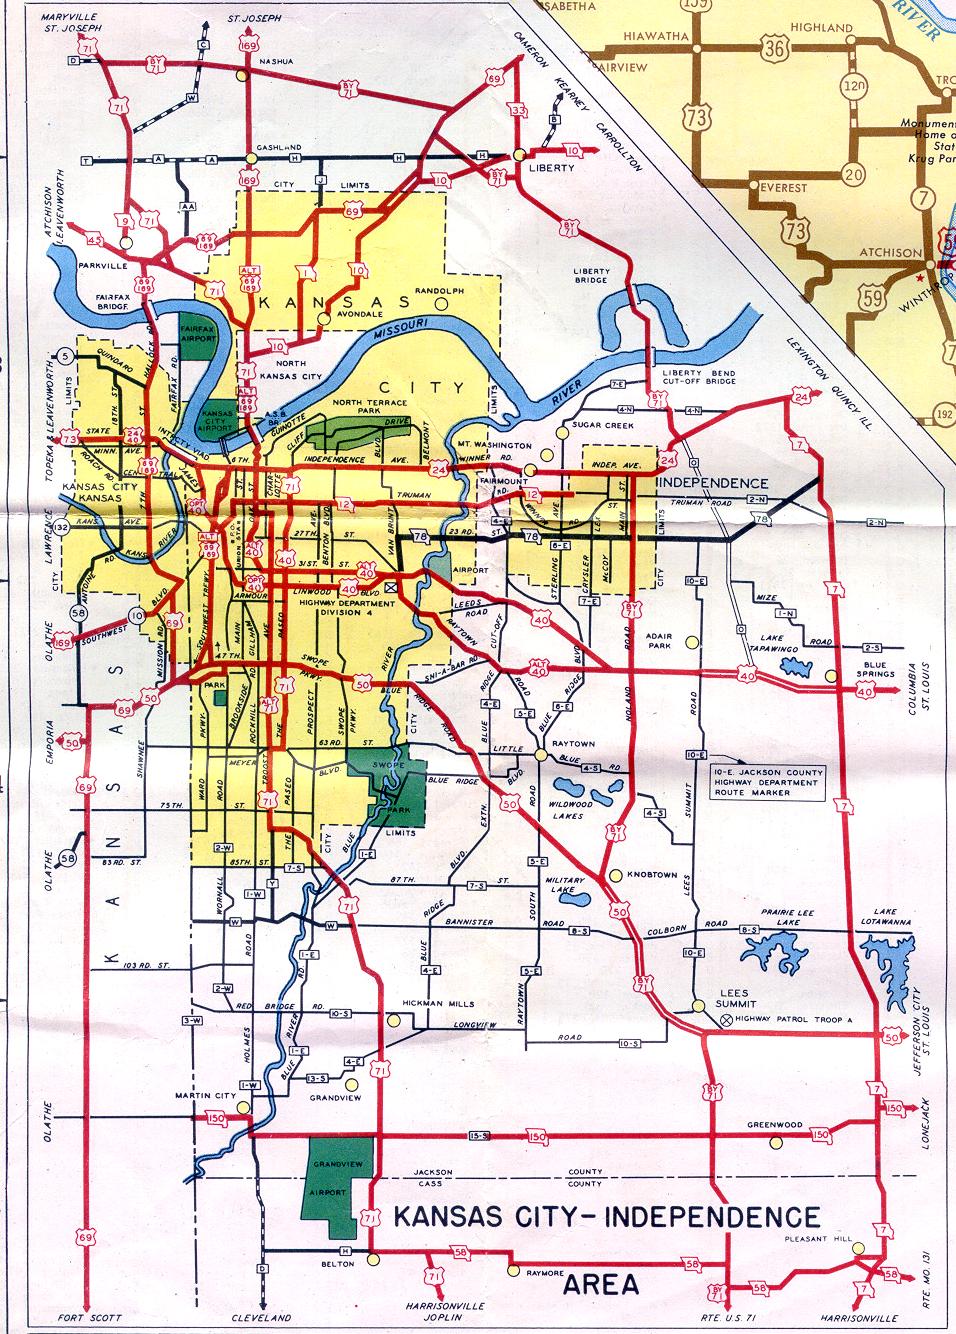 Inset map for Kansas City, Mo. (1952)